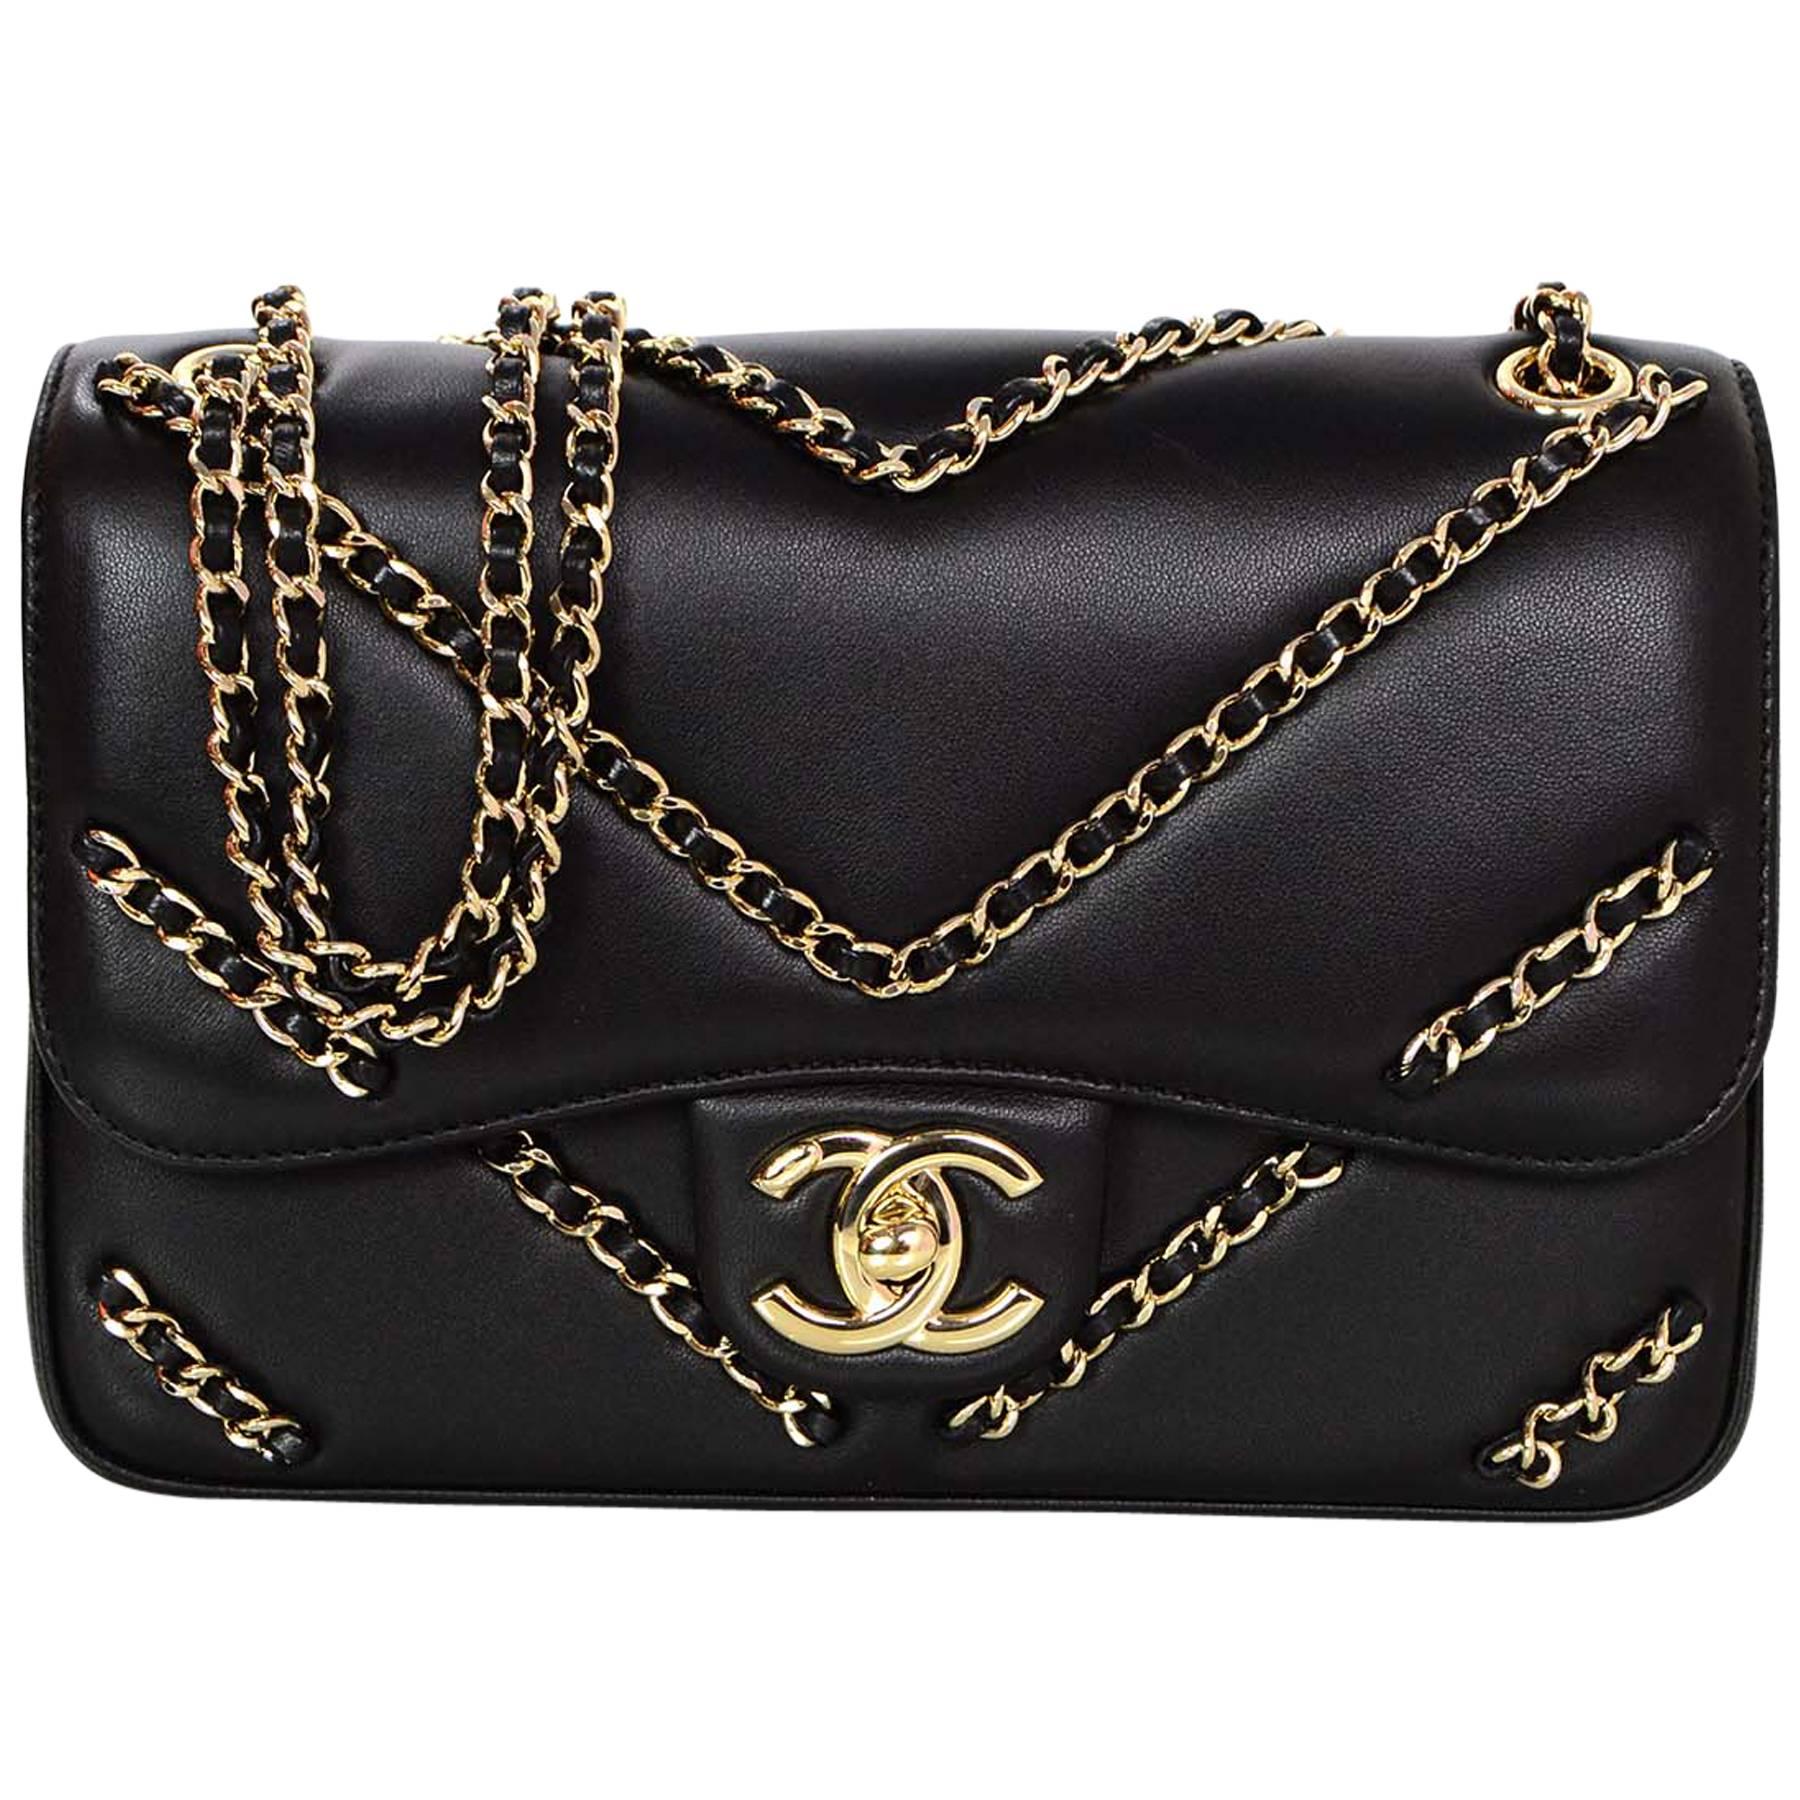 Chanel NEW 2016 Black Chevron Chain Flap Bag